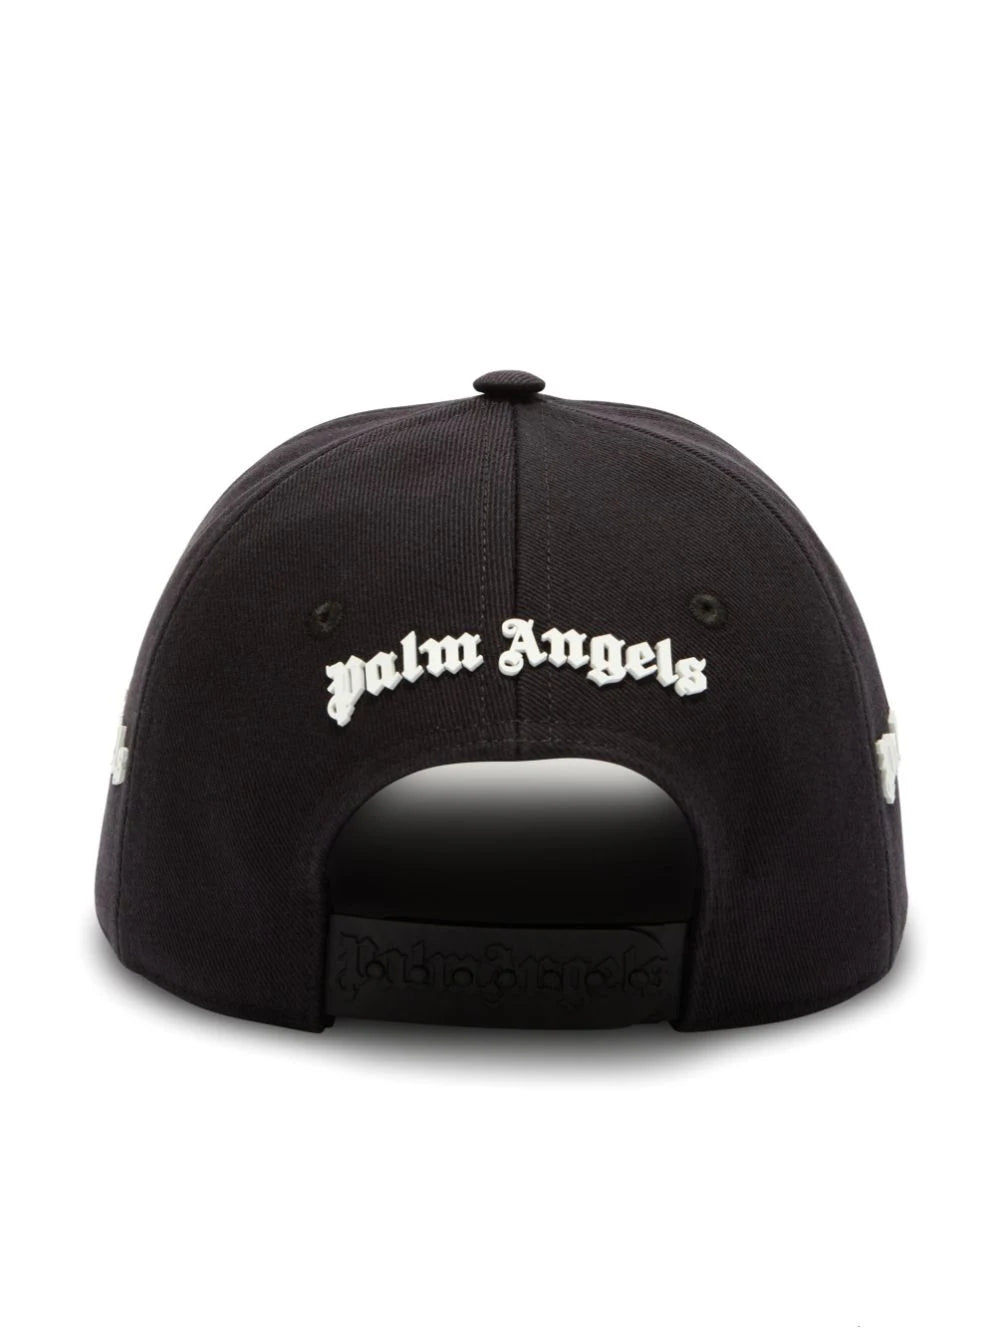 Palm Angels Appliqué Logo Cap in Black